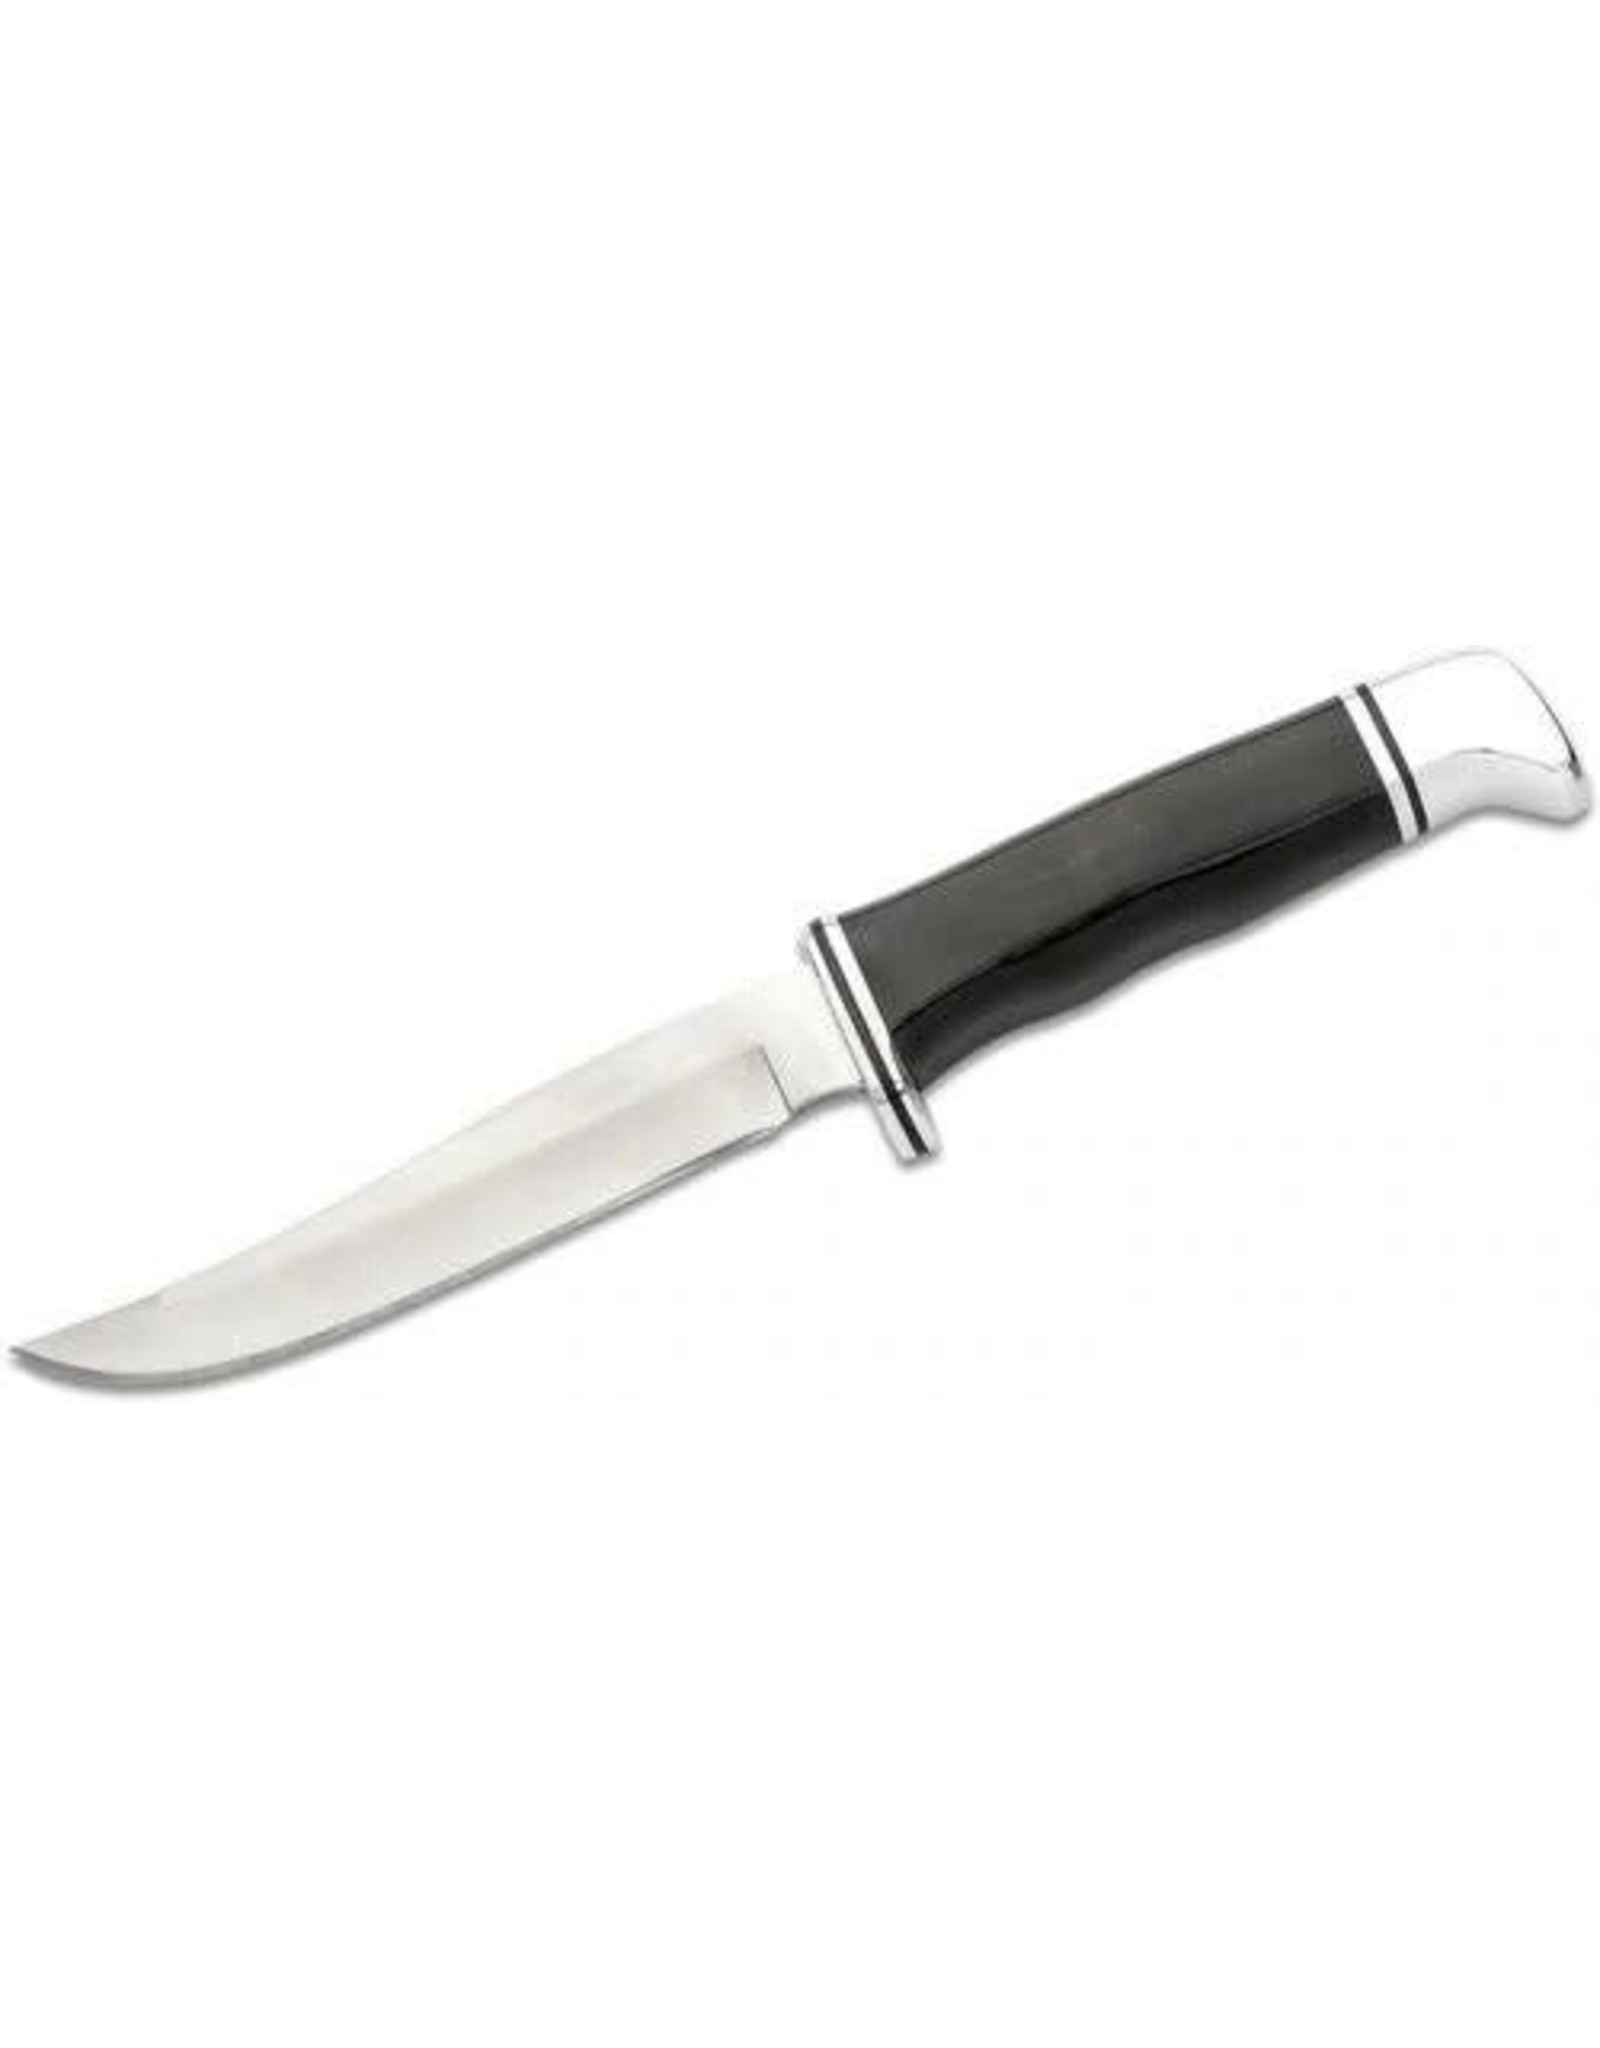 Buck Knives Buck 105 Pathfinder Fixed 5" Blade, Phenolic Handle 0105BKS